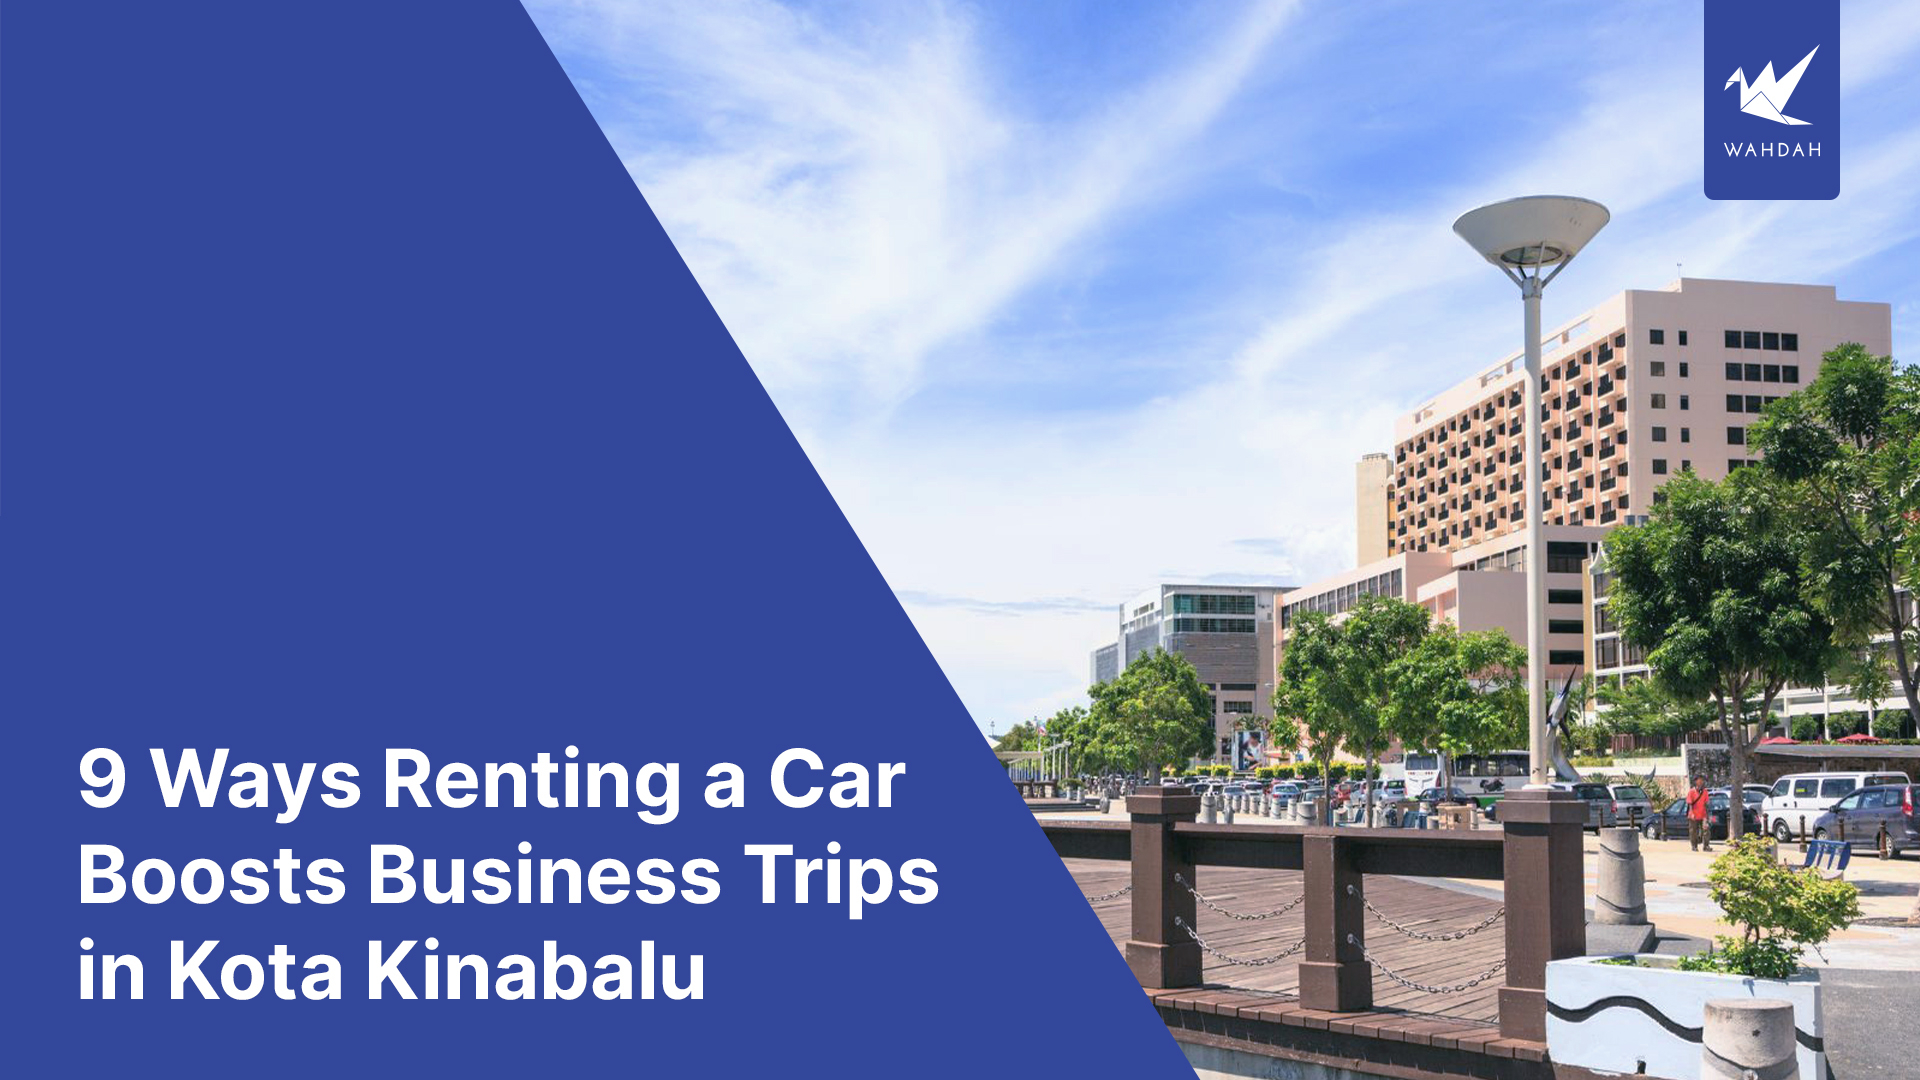 9 Ways Renting a Car Boosts Business Trips in Kota Kinabalu